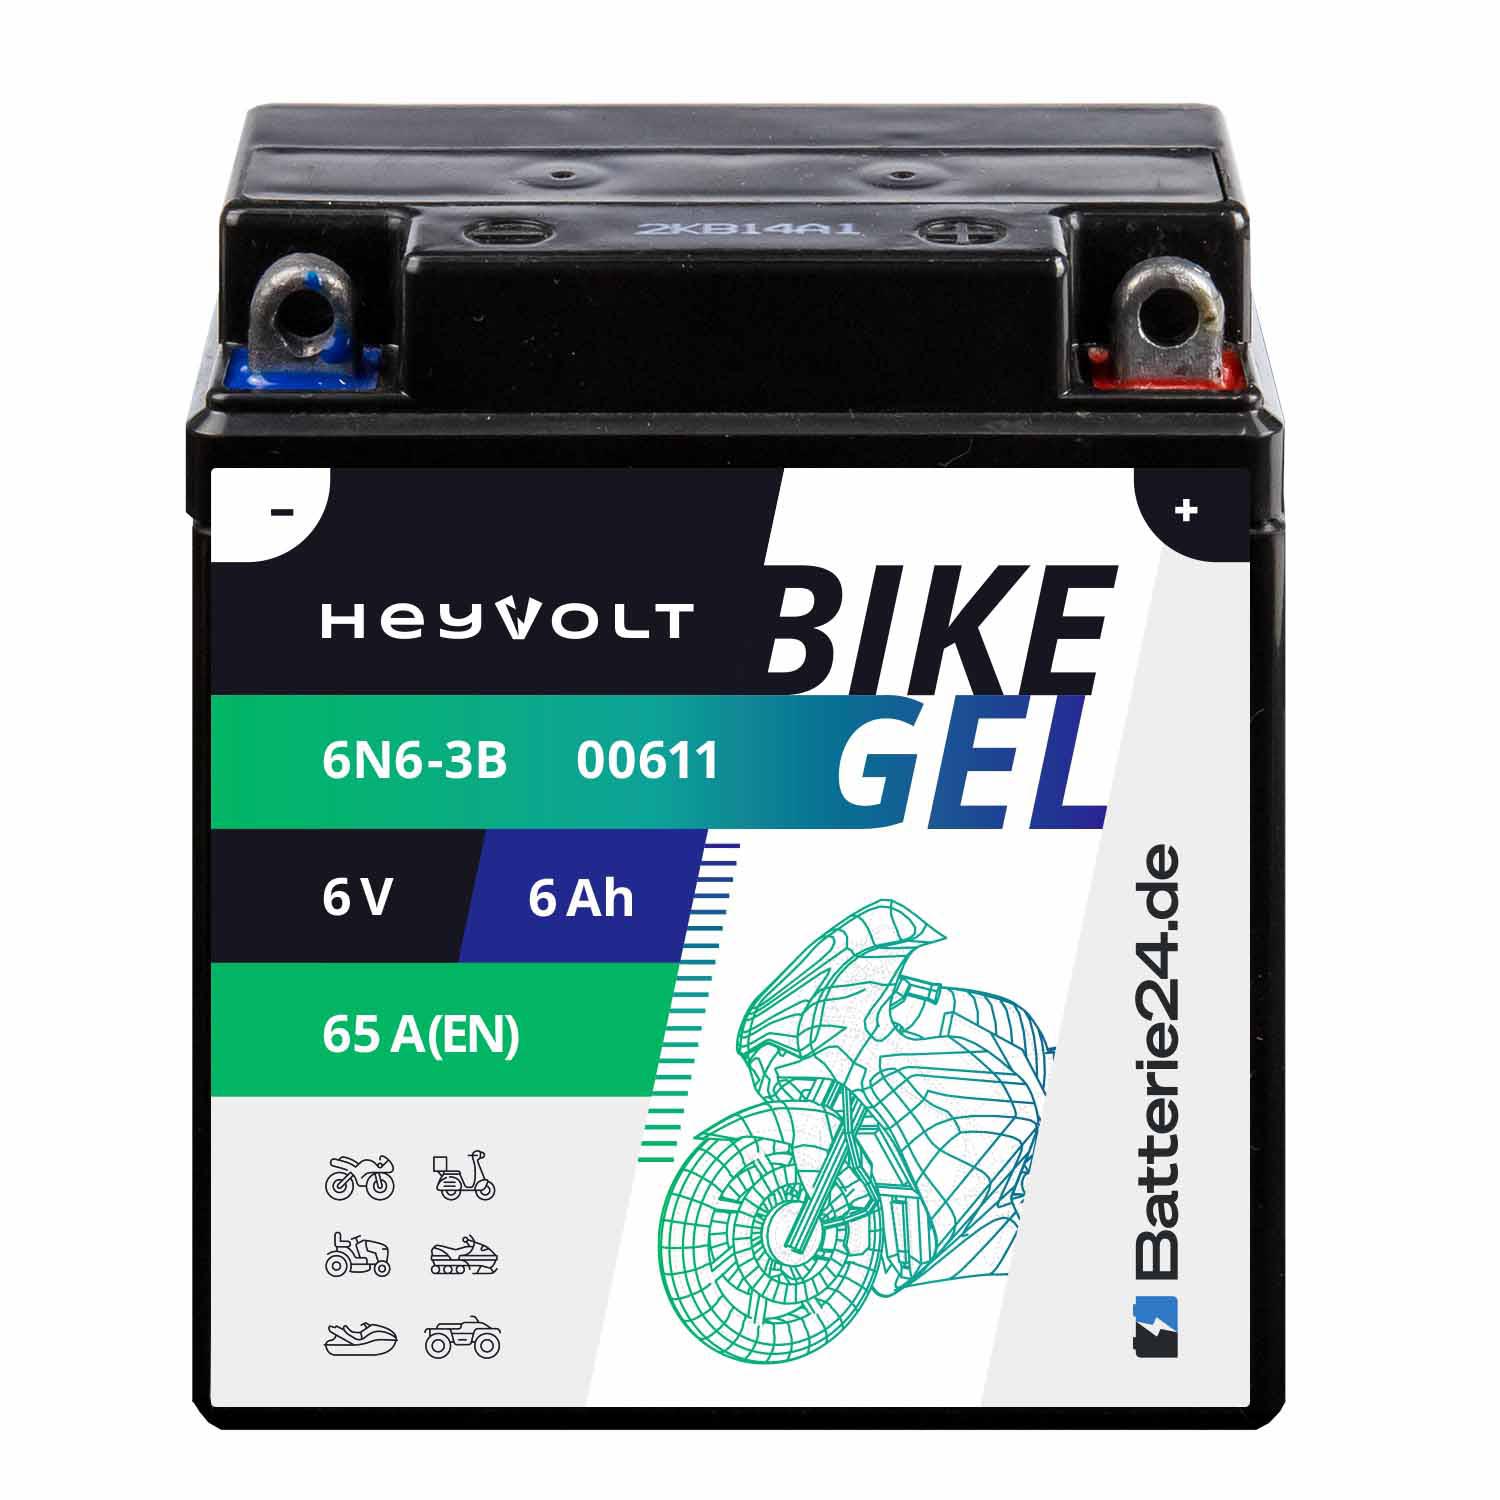 HeyVolt BIKE GEL Motorradbatterie 6N6-3B 00611 6V 6Ah